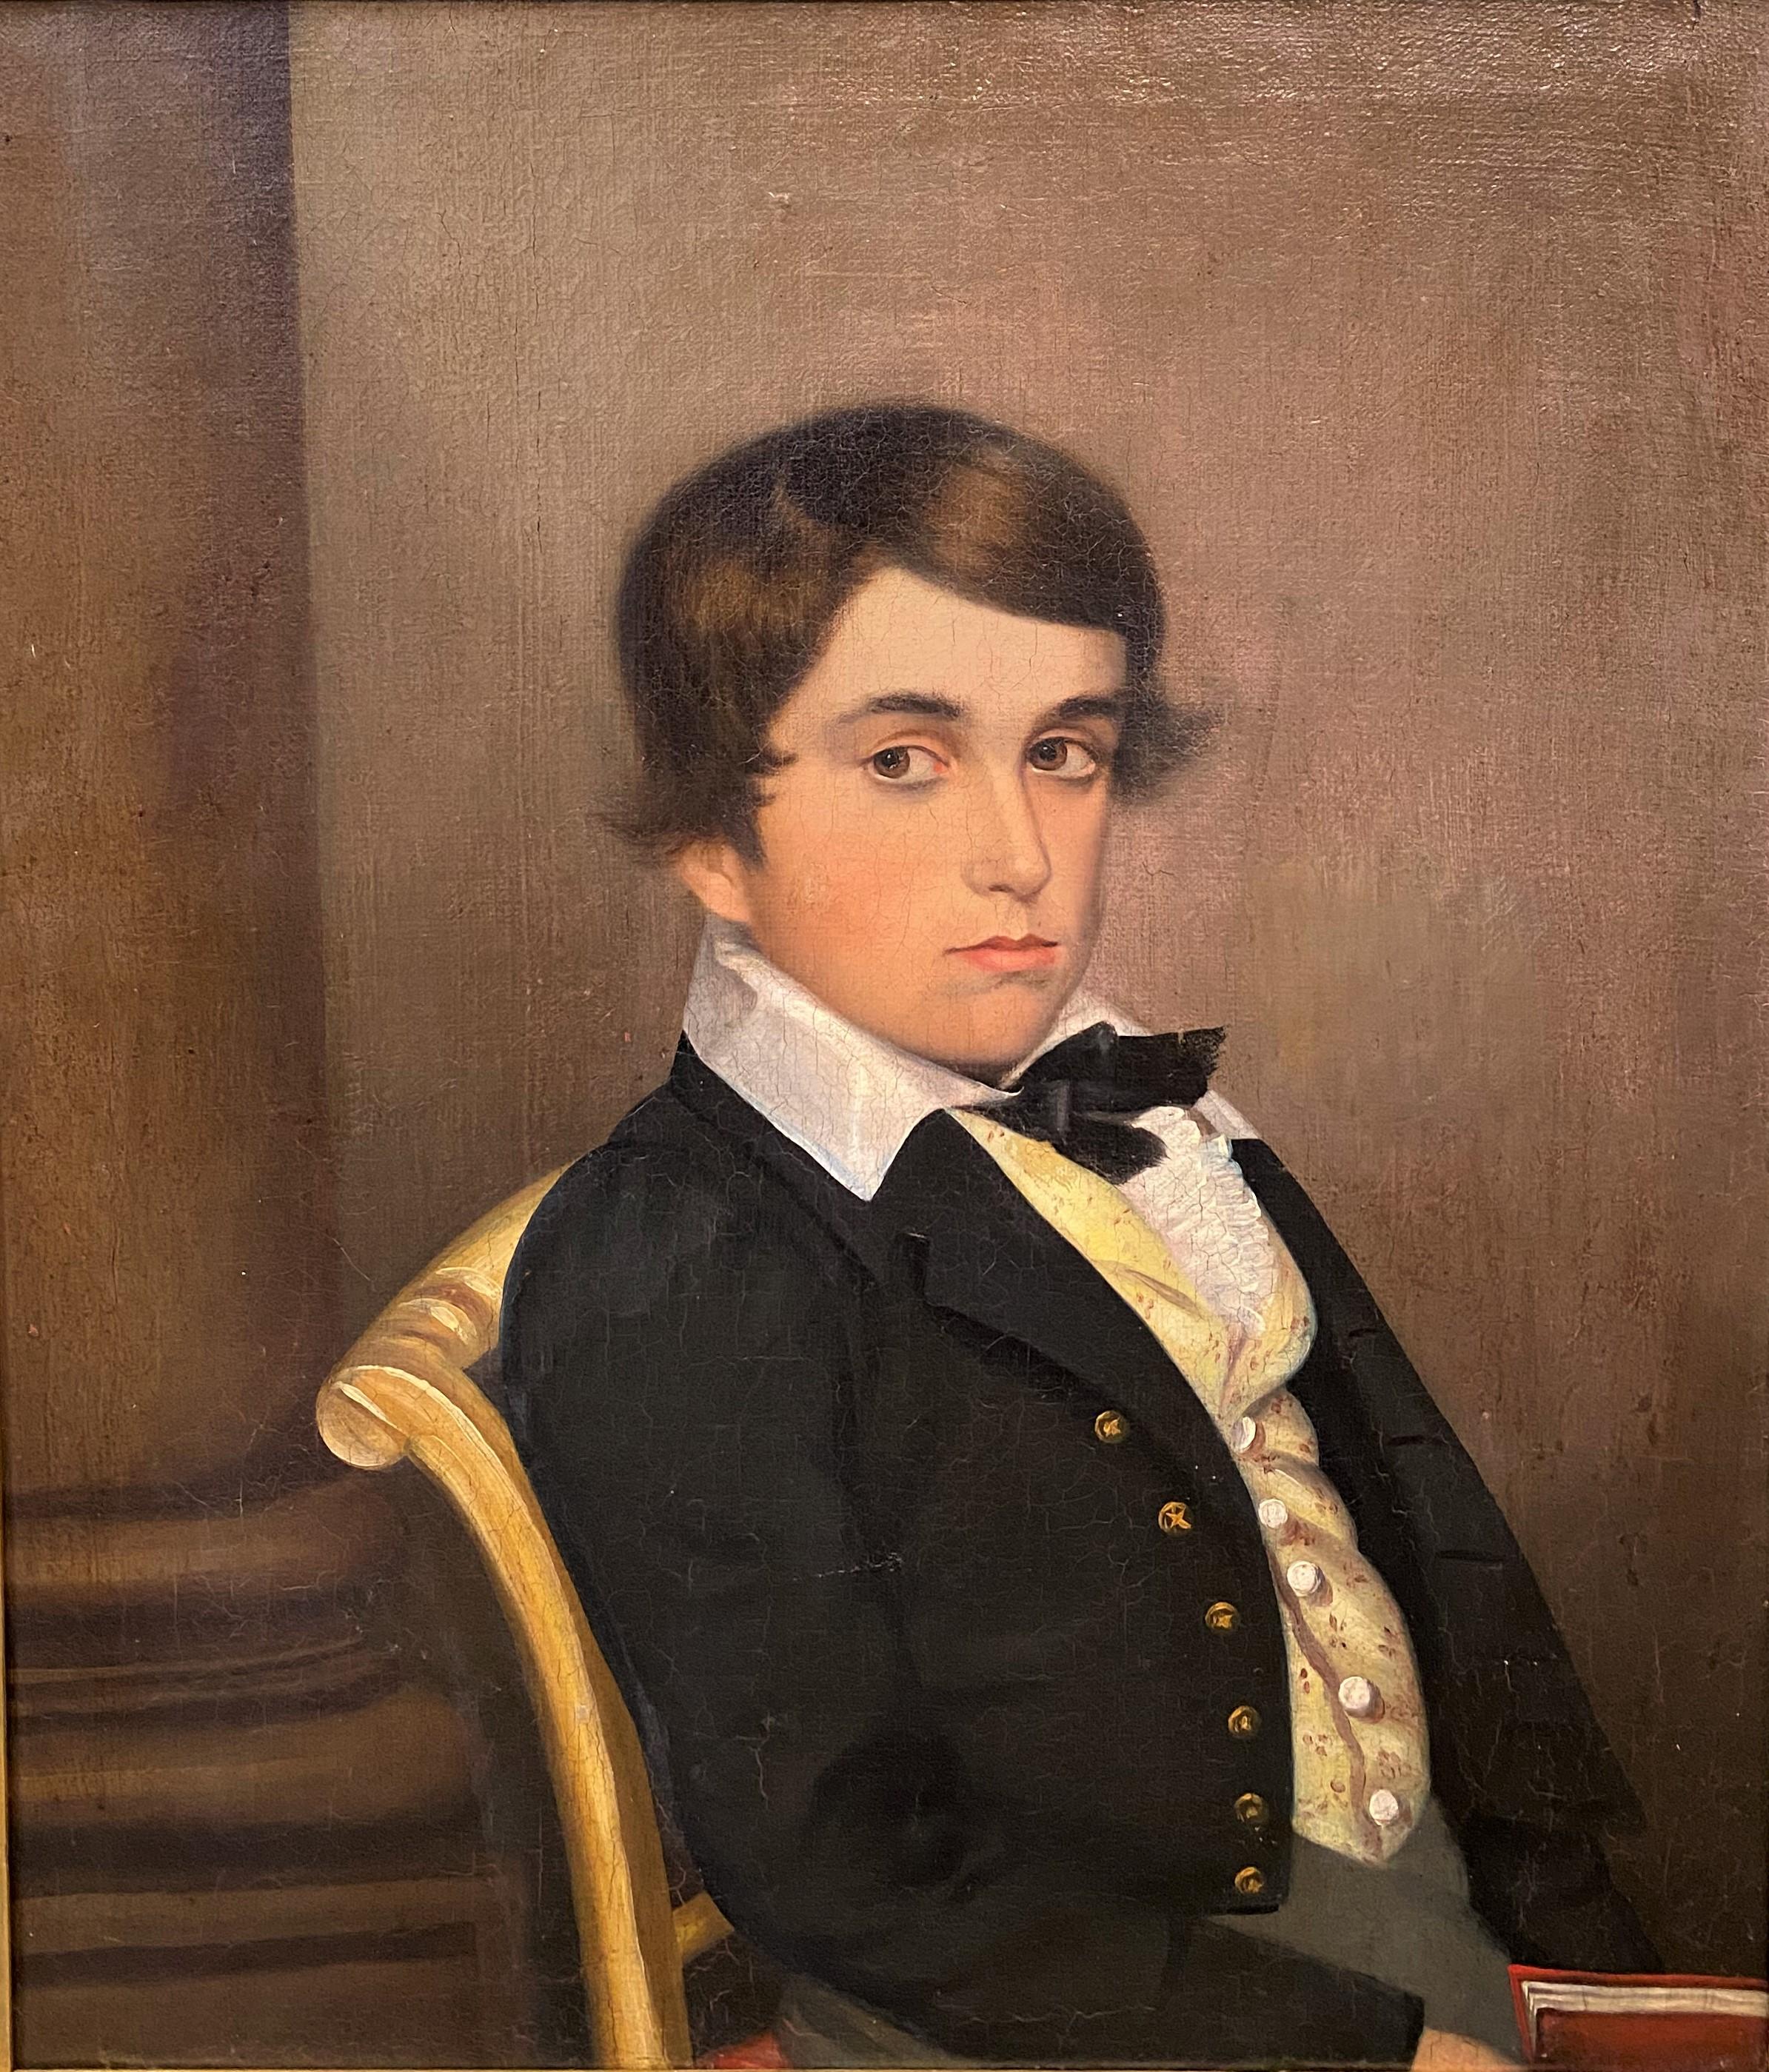 American School Portrait of a Boy - Painting by 19th century American School